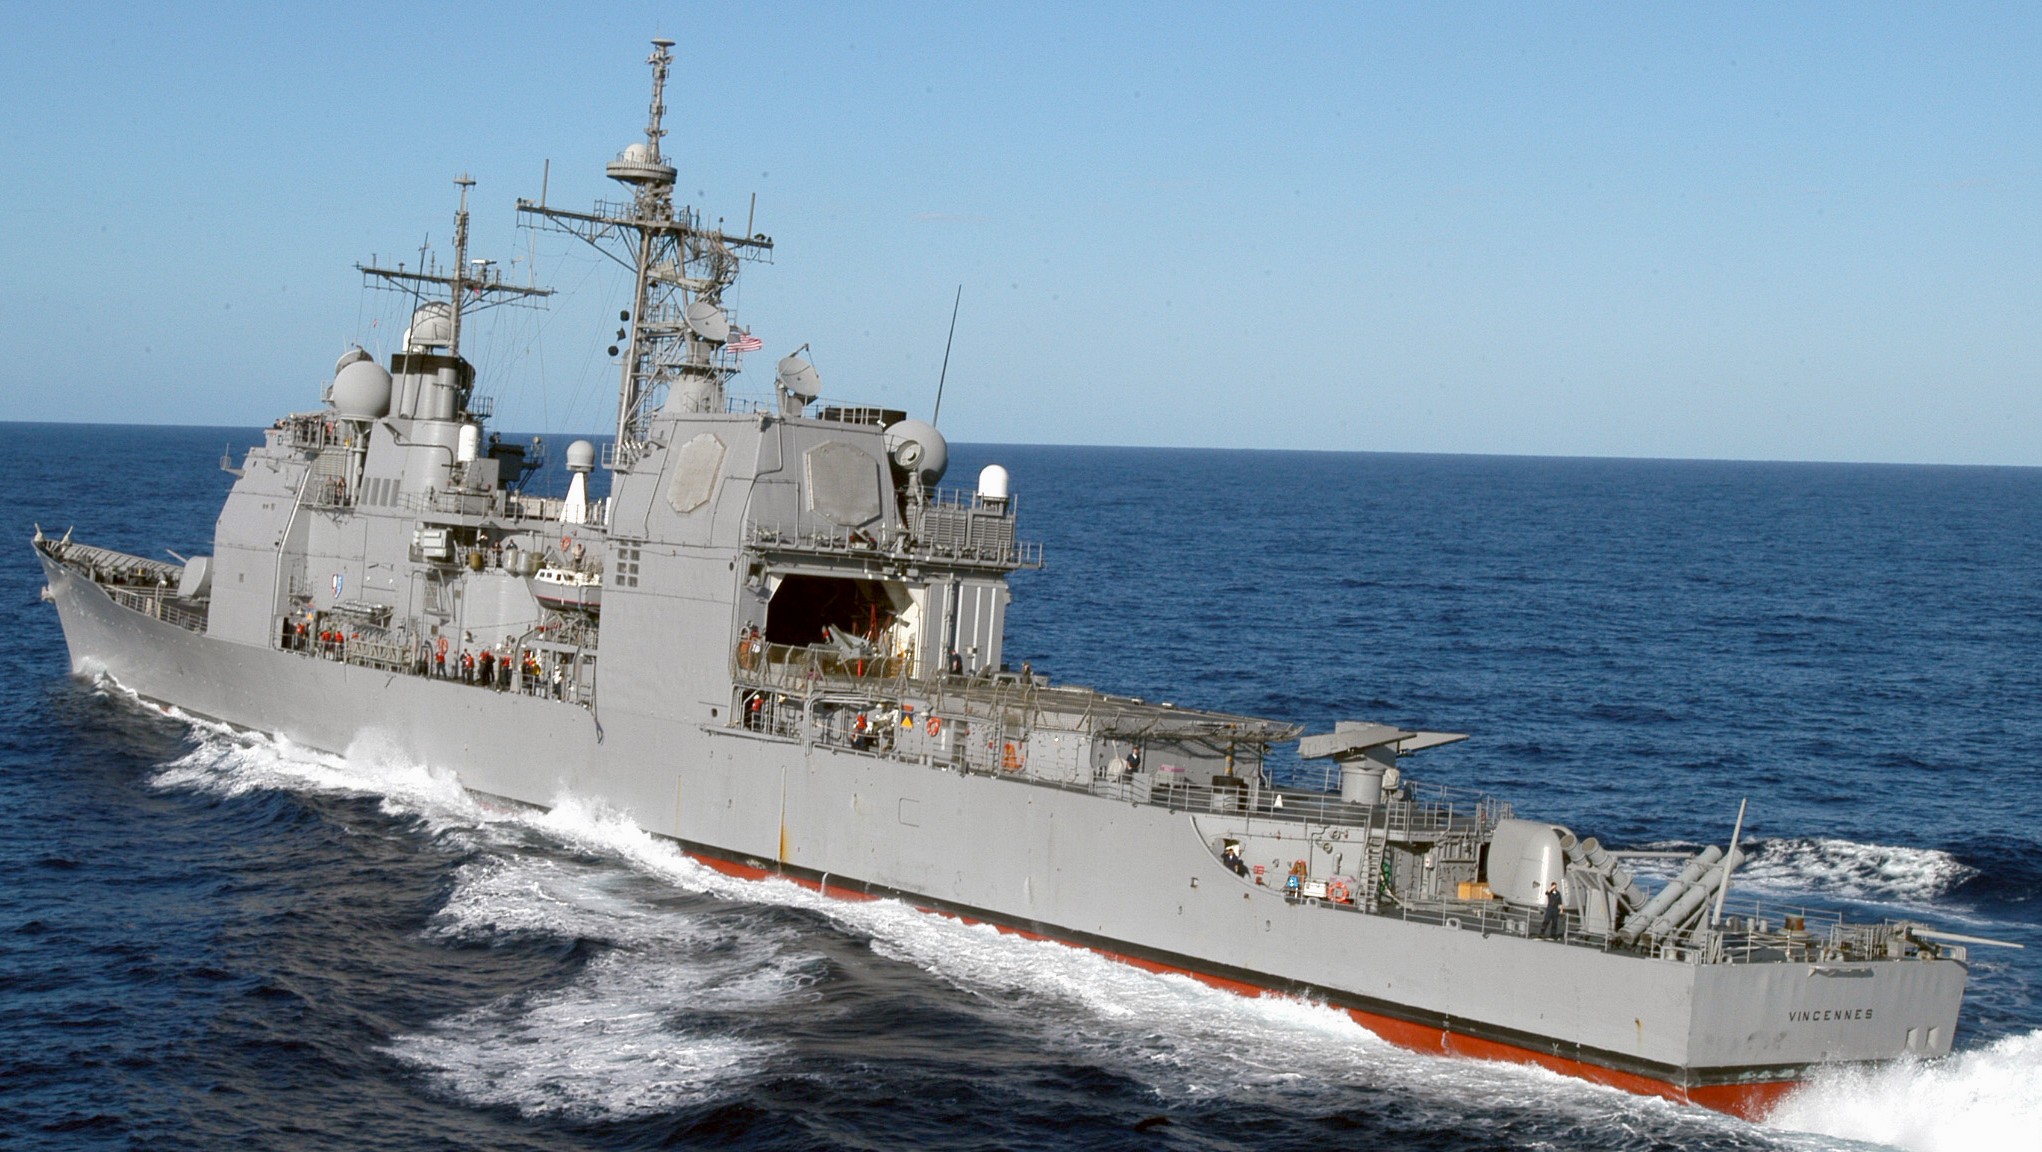 cg-49 uss vincennes ticonderoga class guided missile cruiser aegis us navy 7th fleet aor 08